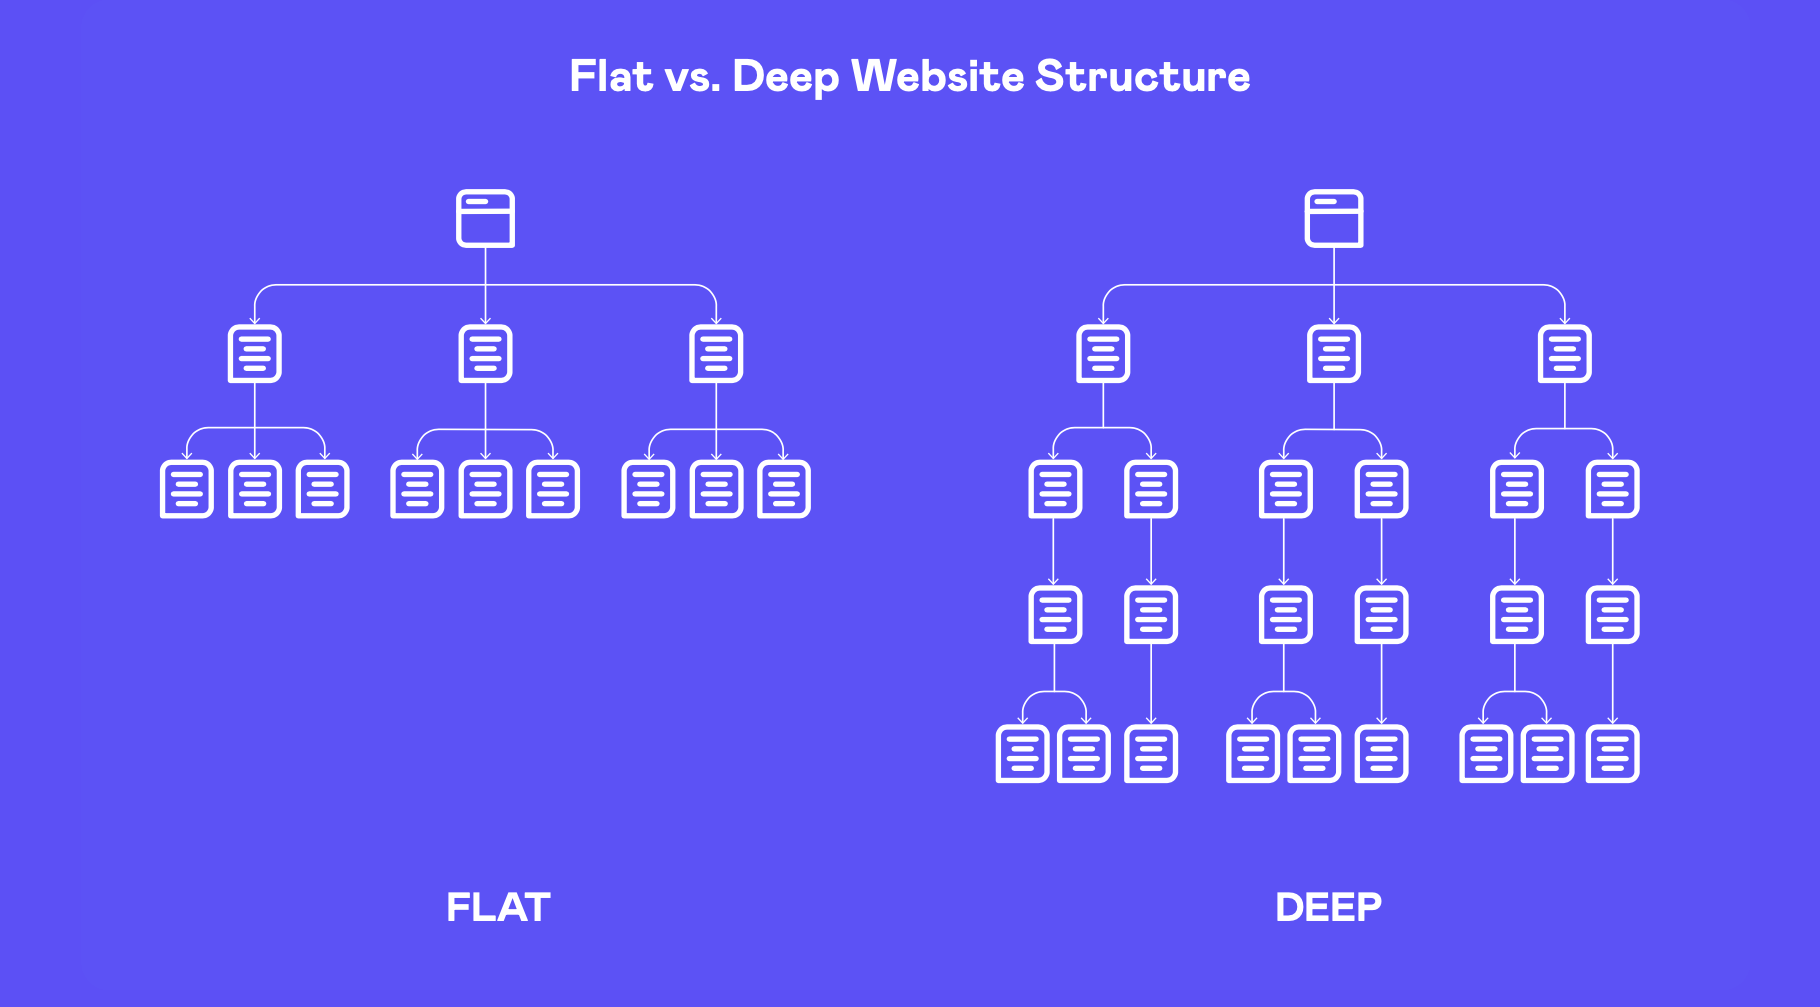 Flat vs. deep website architecture